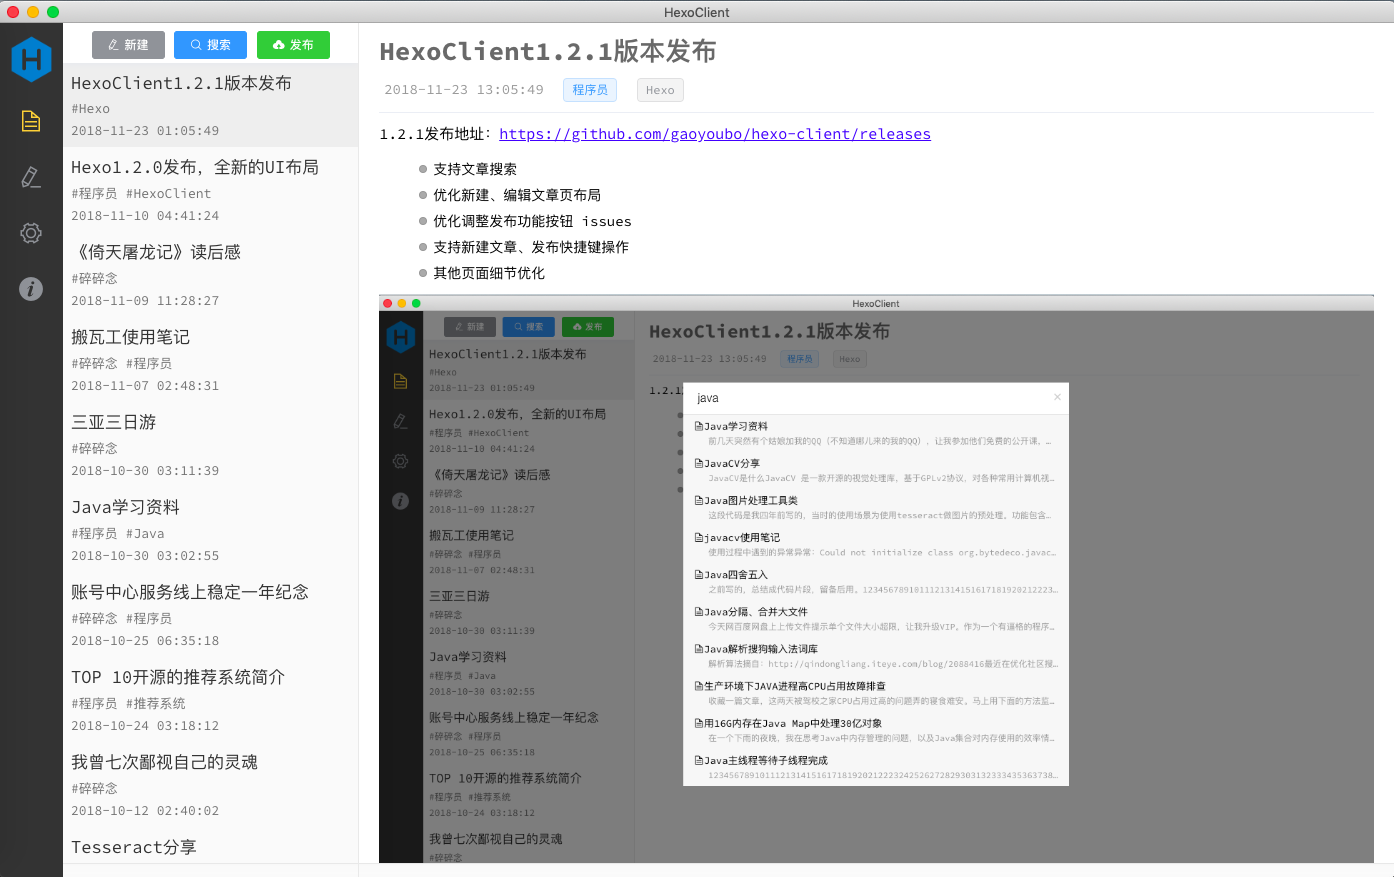 HexoClient 1.2.2 发布，更新文章自动发布流程